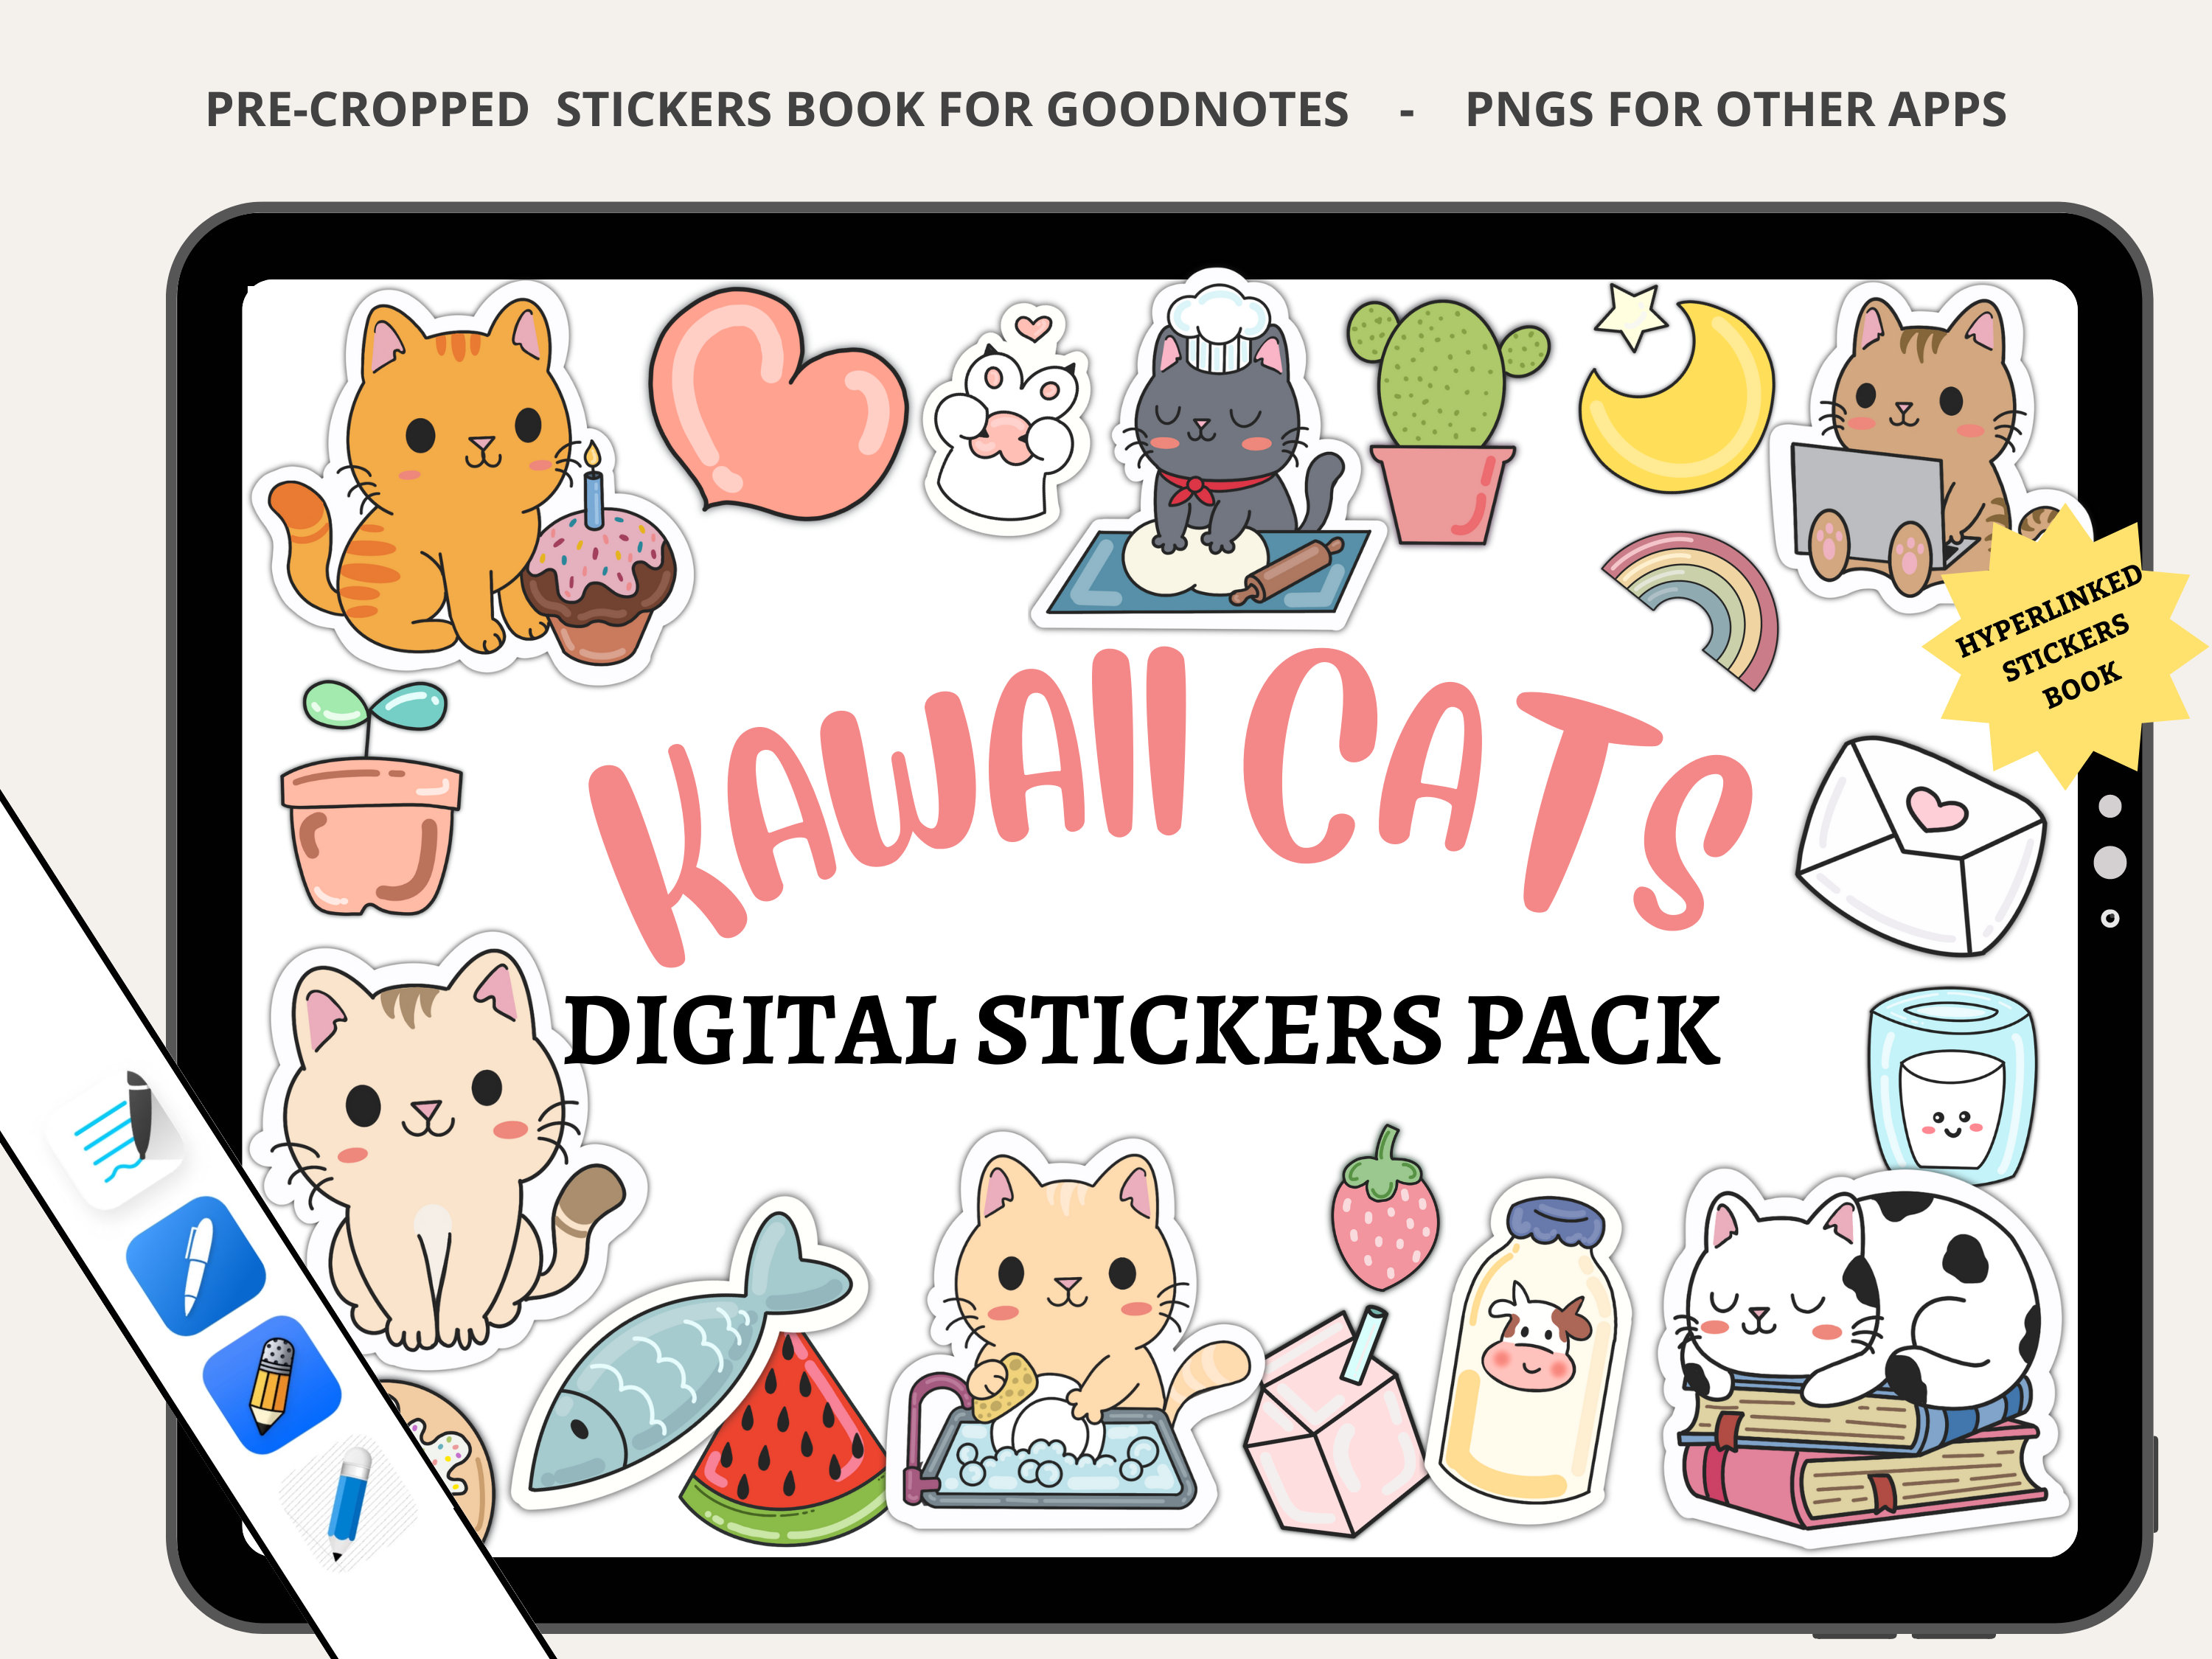 Kawaii Cats Party Decorative Stickers, Cat Stickers – MyKawaiiCrate